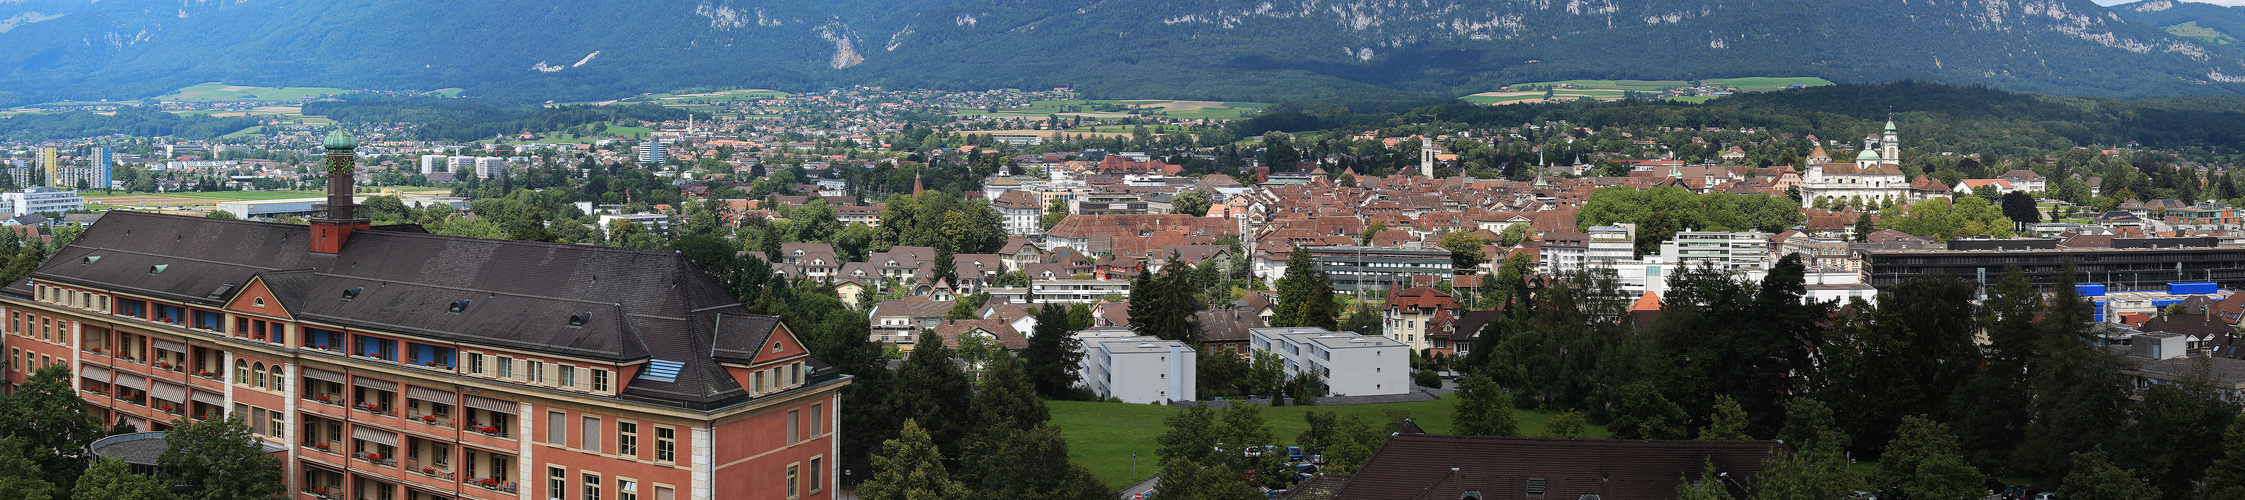 Bürgerspital und Solothurn